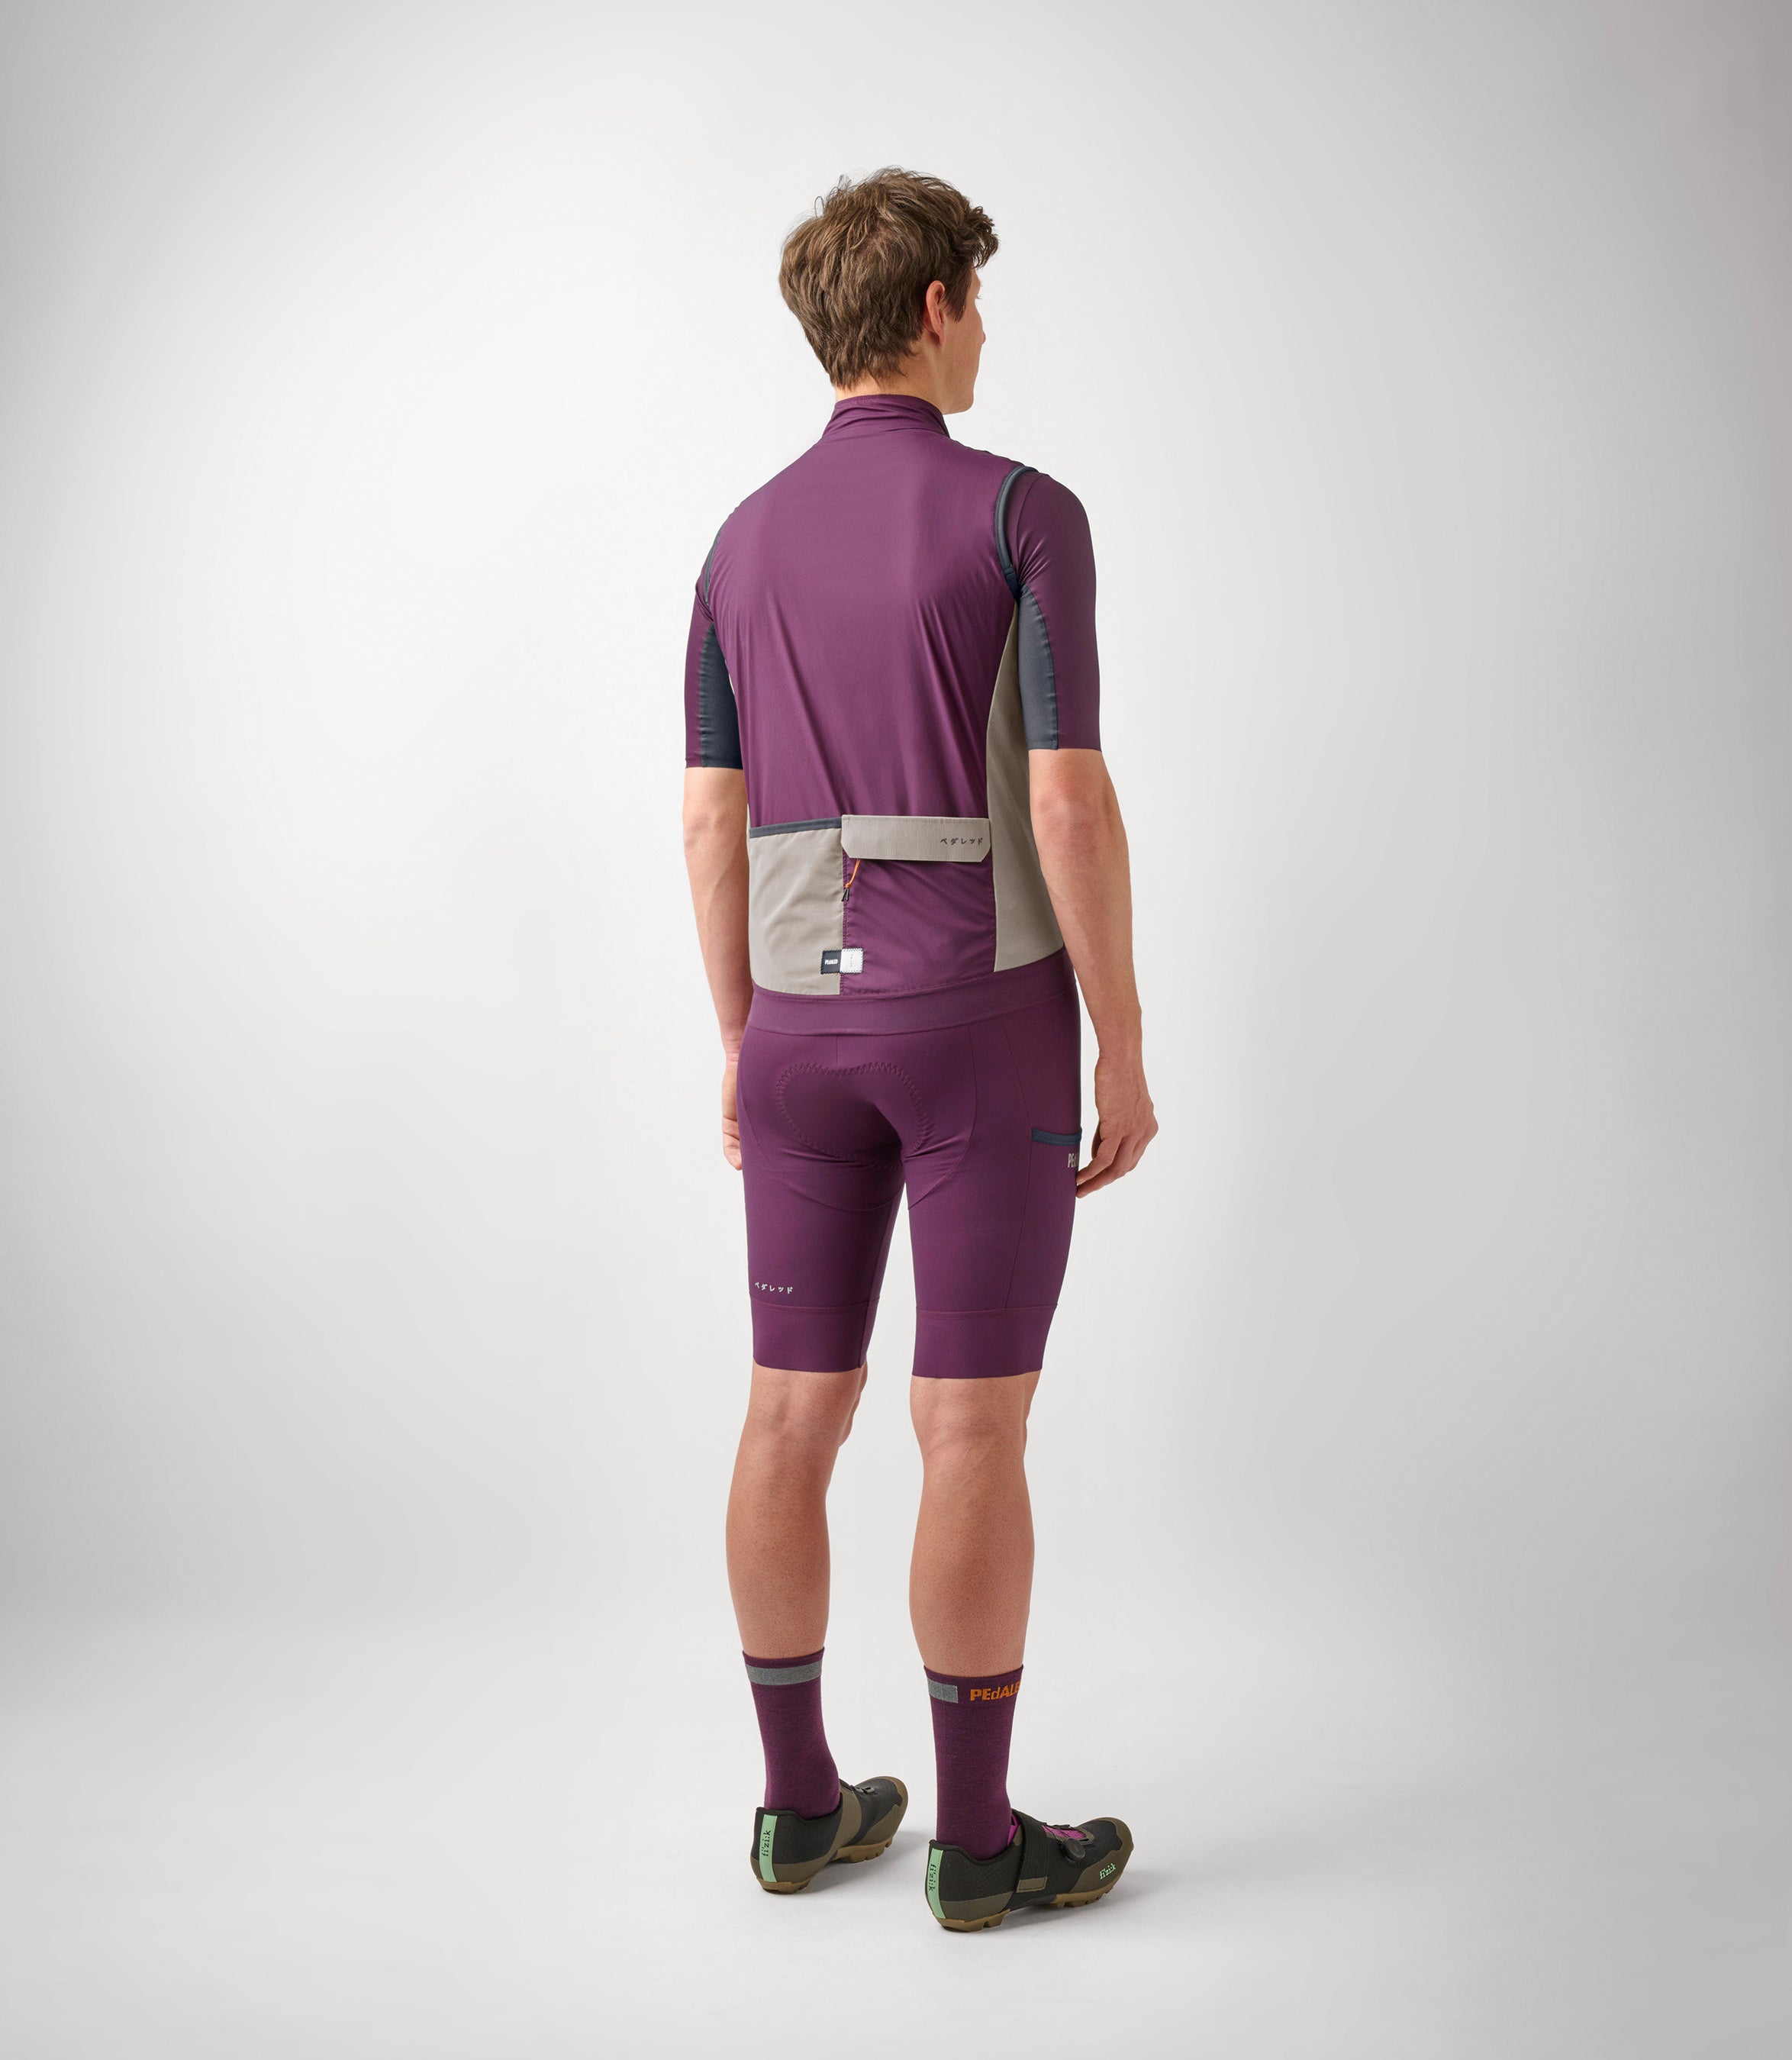 23SAVOD10PE_4_men cycling alpha vest purple odyssey total body back pedaled